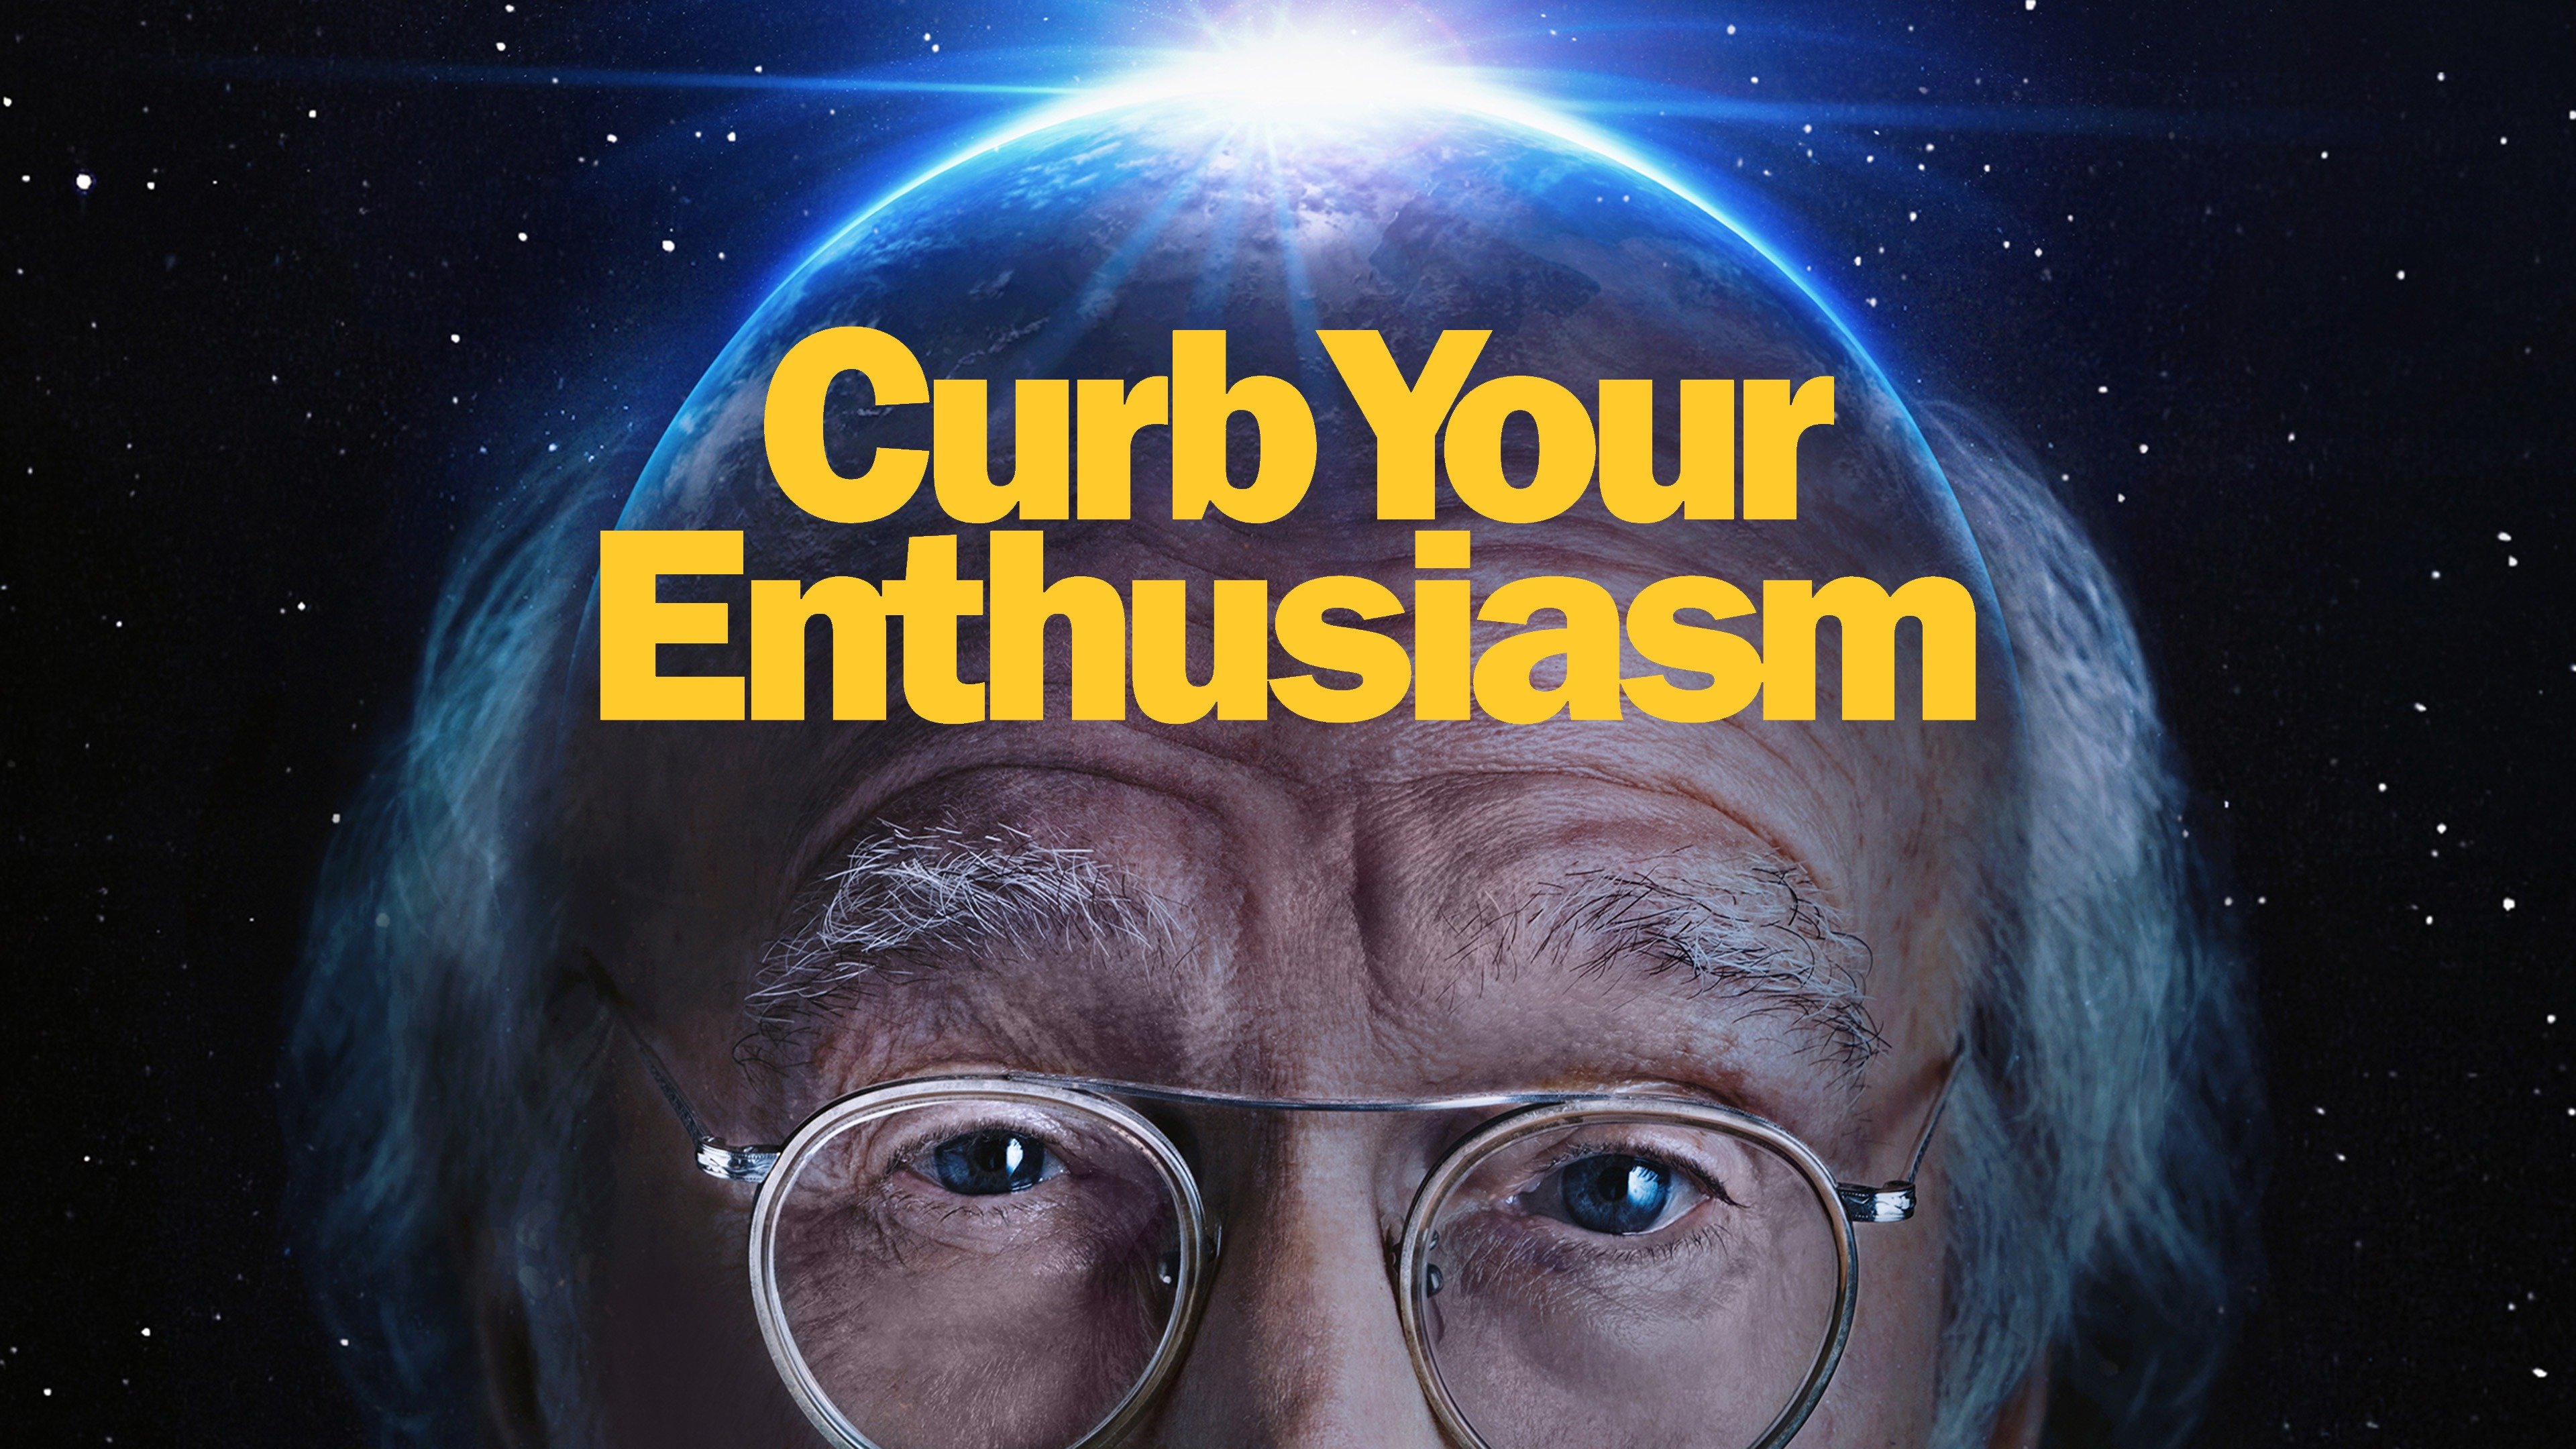 watch curb your enthusiasm season 7 online free